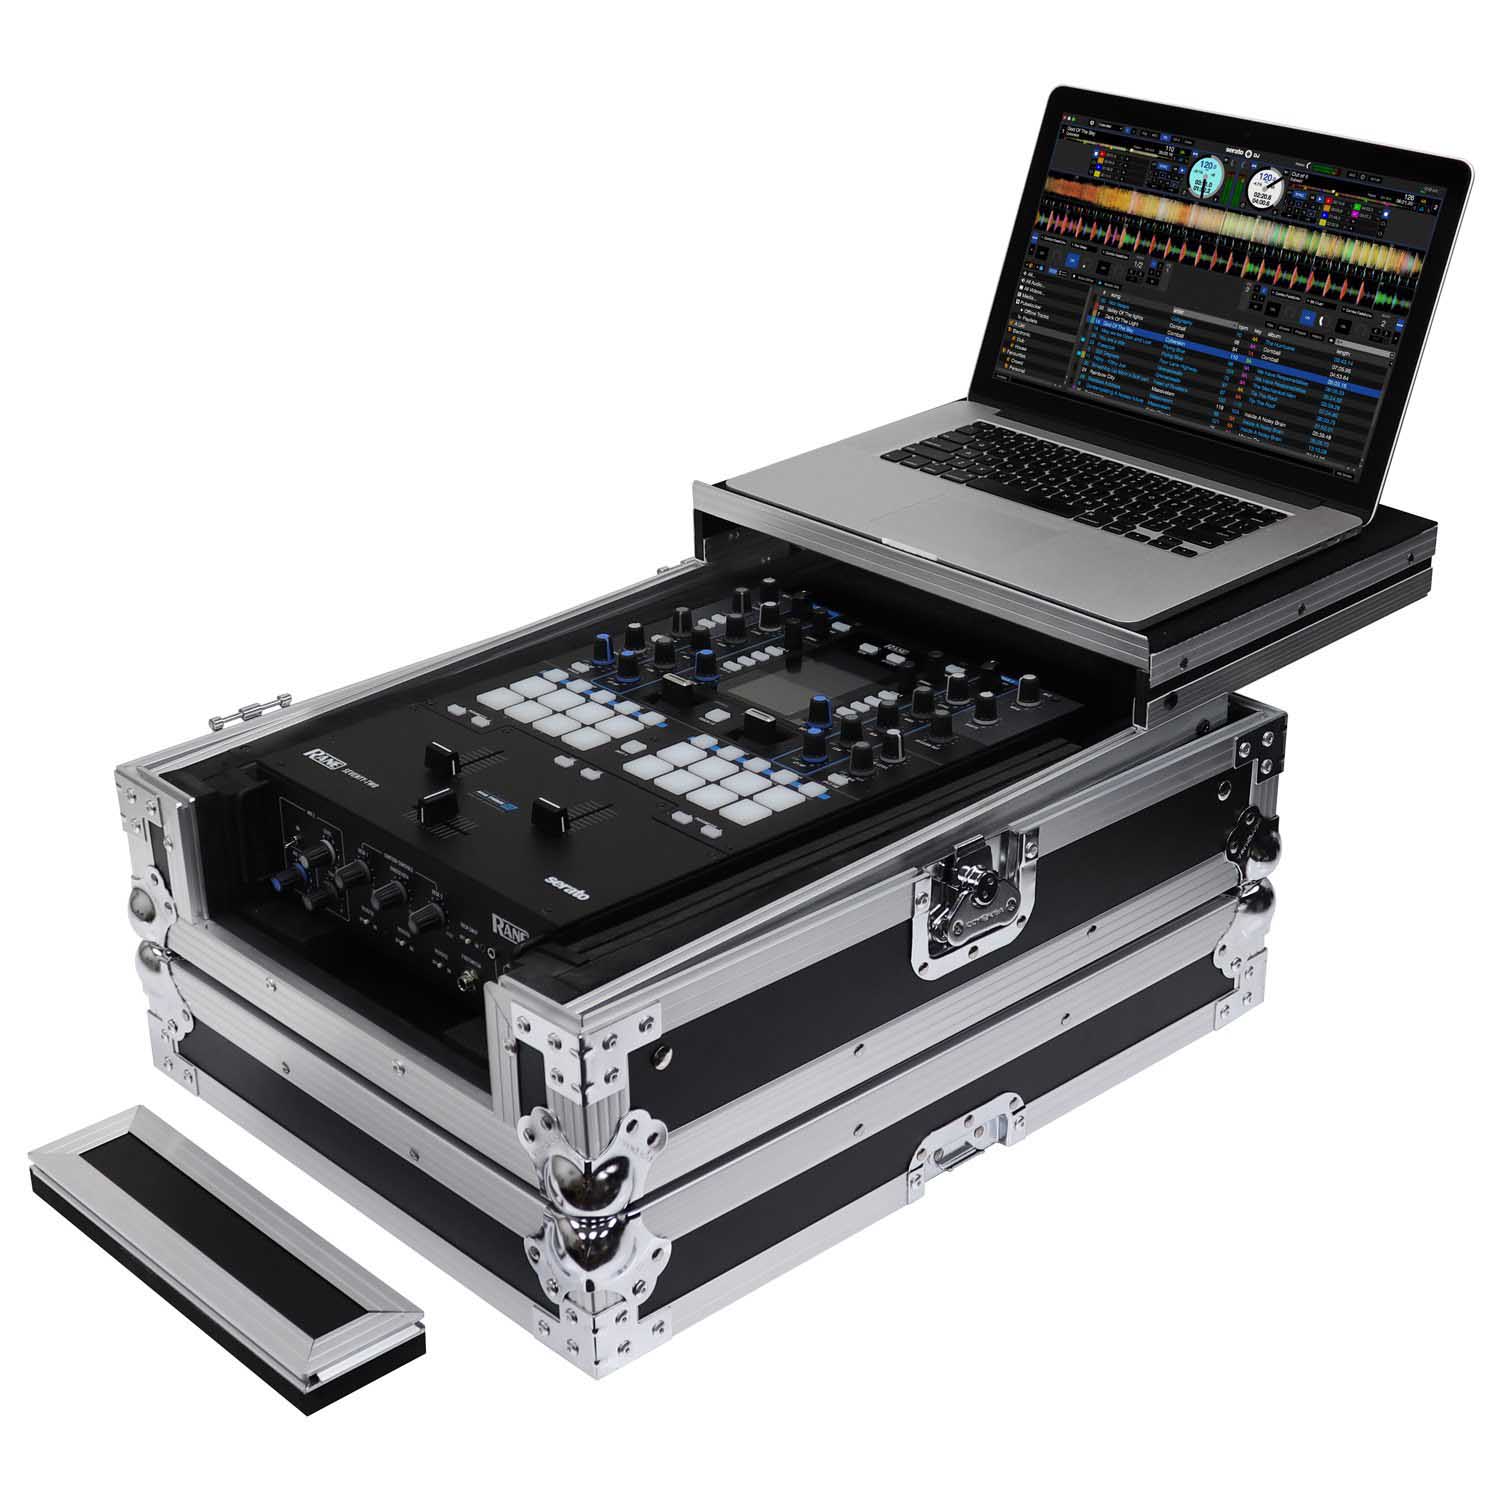 Odyssey FZGS12MX1XD 12" Format DJ Mixer Case with Extra Deep Rear Compartment - Hollywood DJ